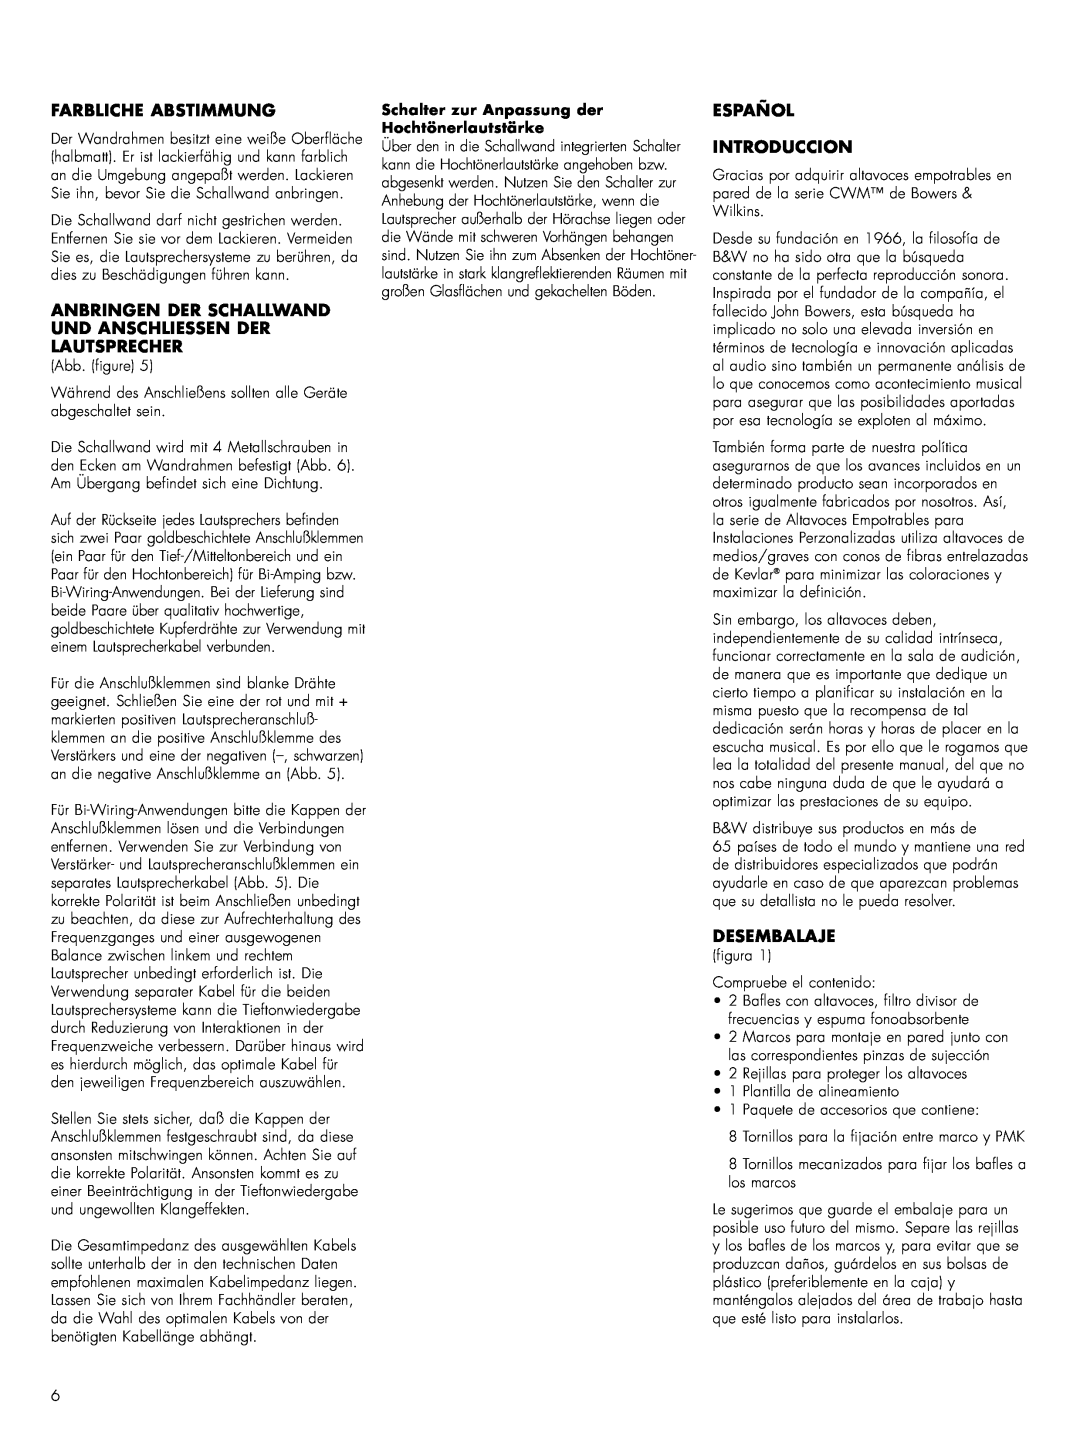 Bowers & Wilkins Sig7-NT owner manual Farbliche Abstimmung, Español Introduccion, Desembalaje 